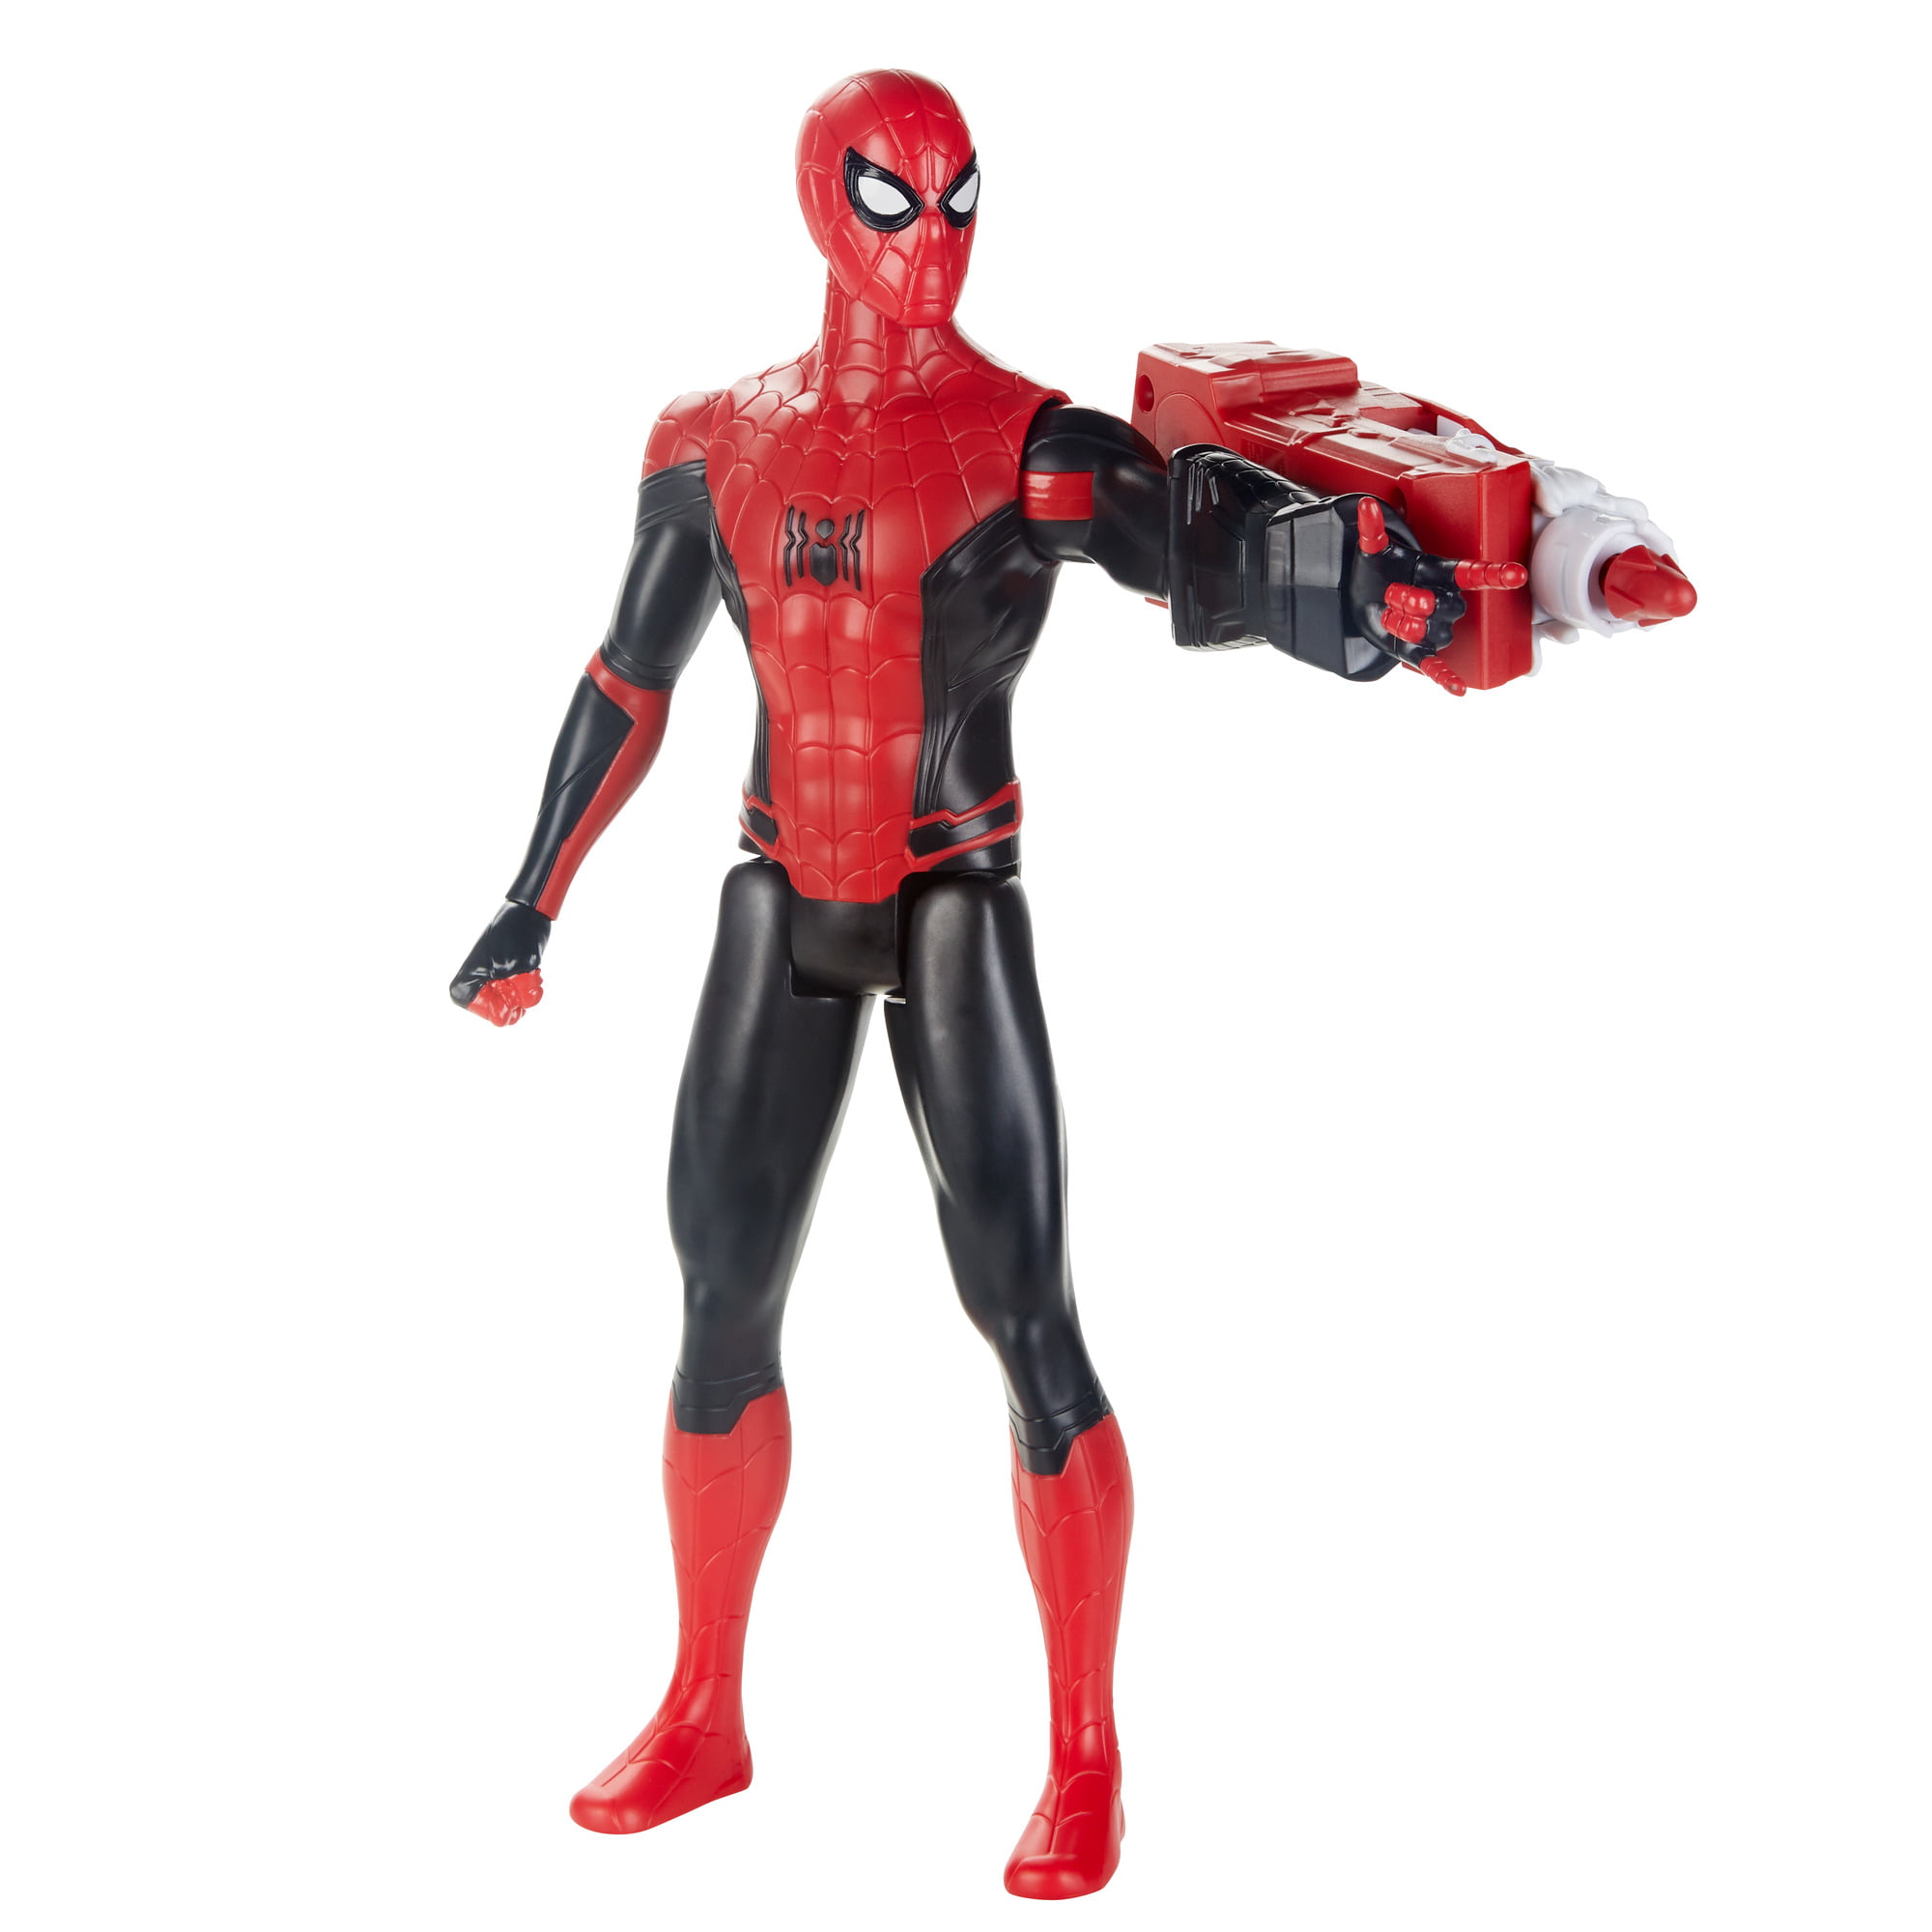 spider man far from home titan hero series